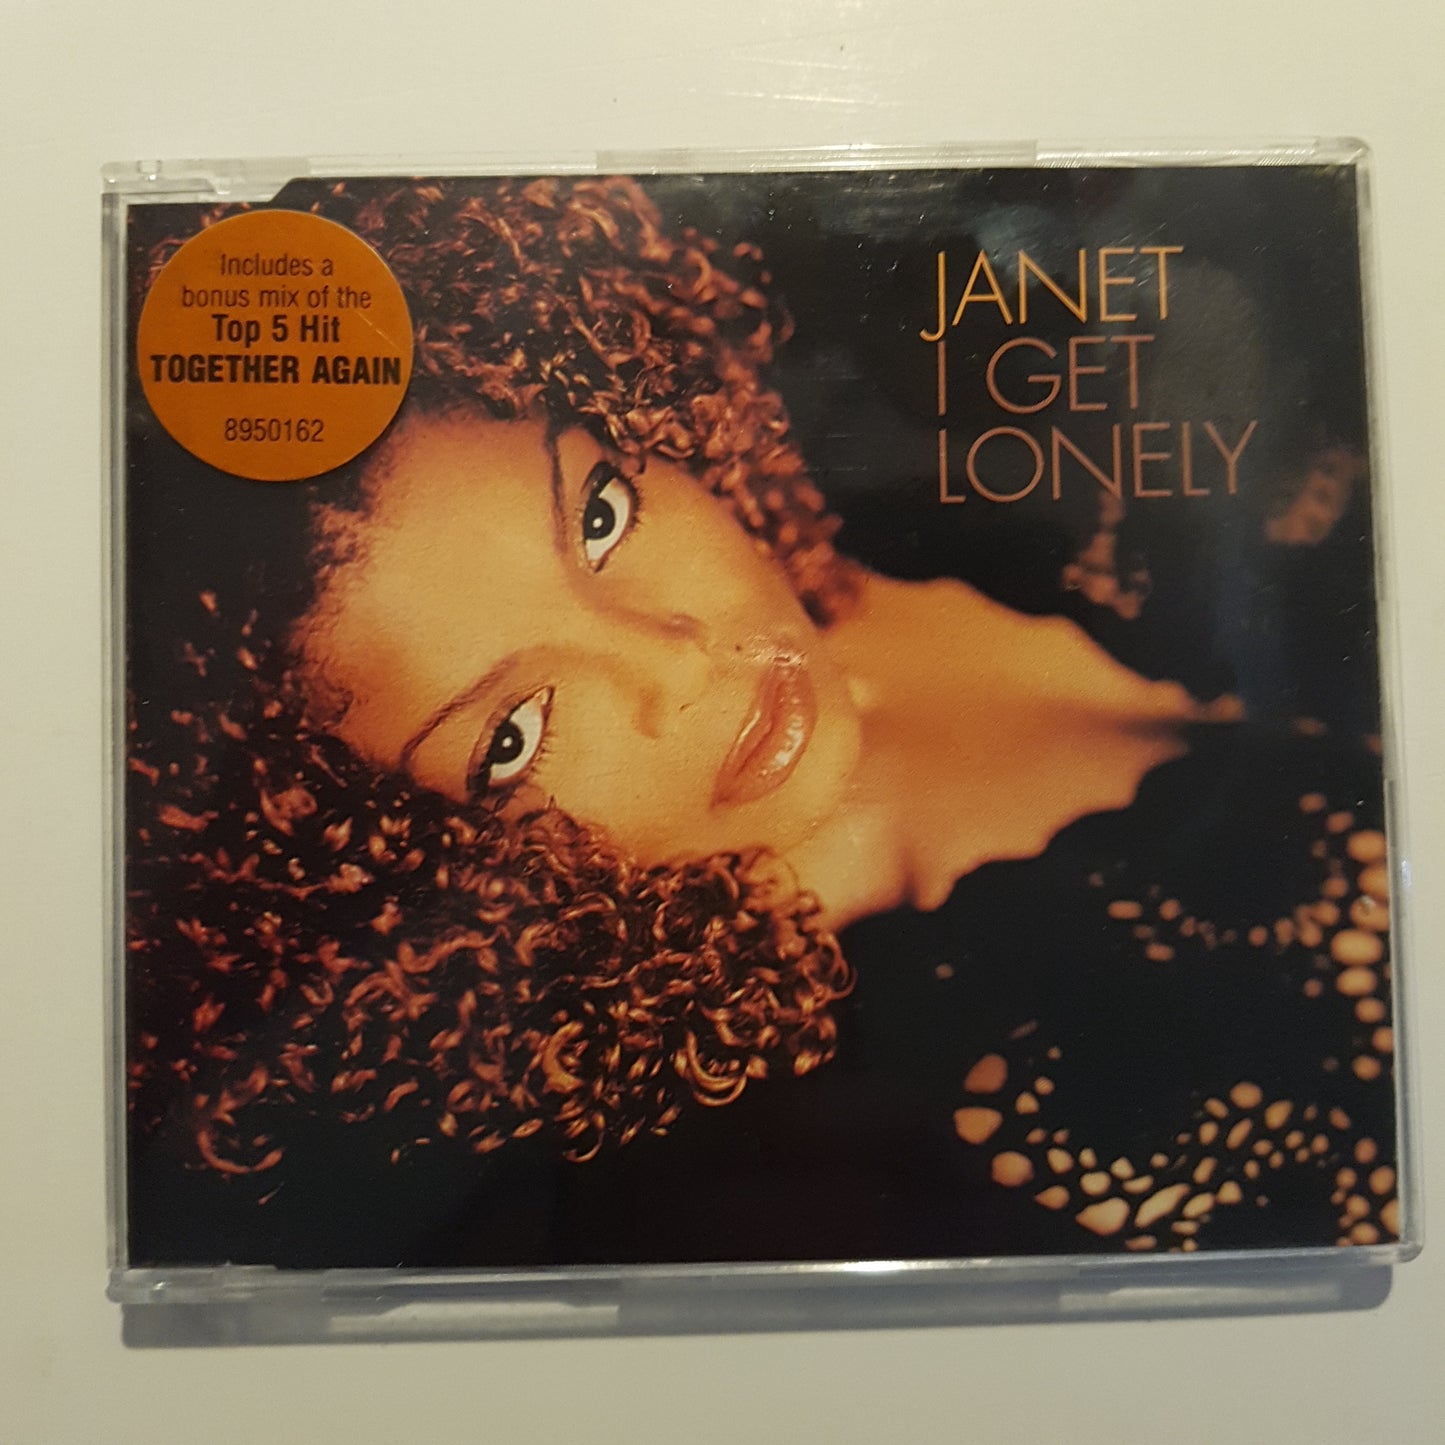 Janet Jackson, I Get Lonely (Single CD)